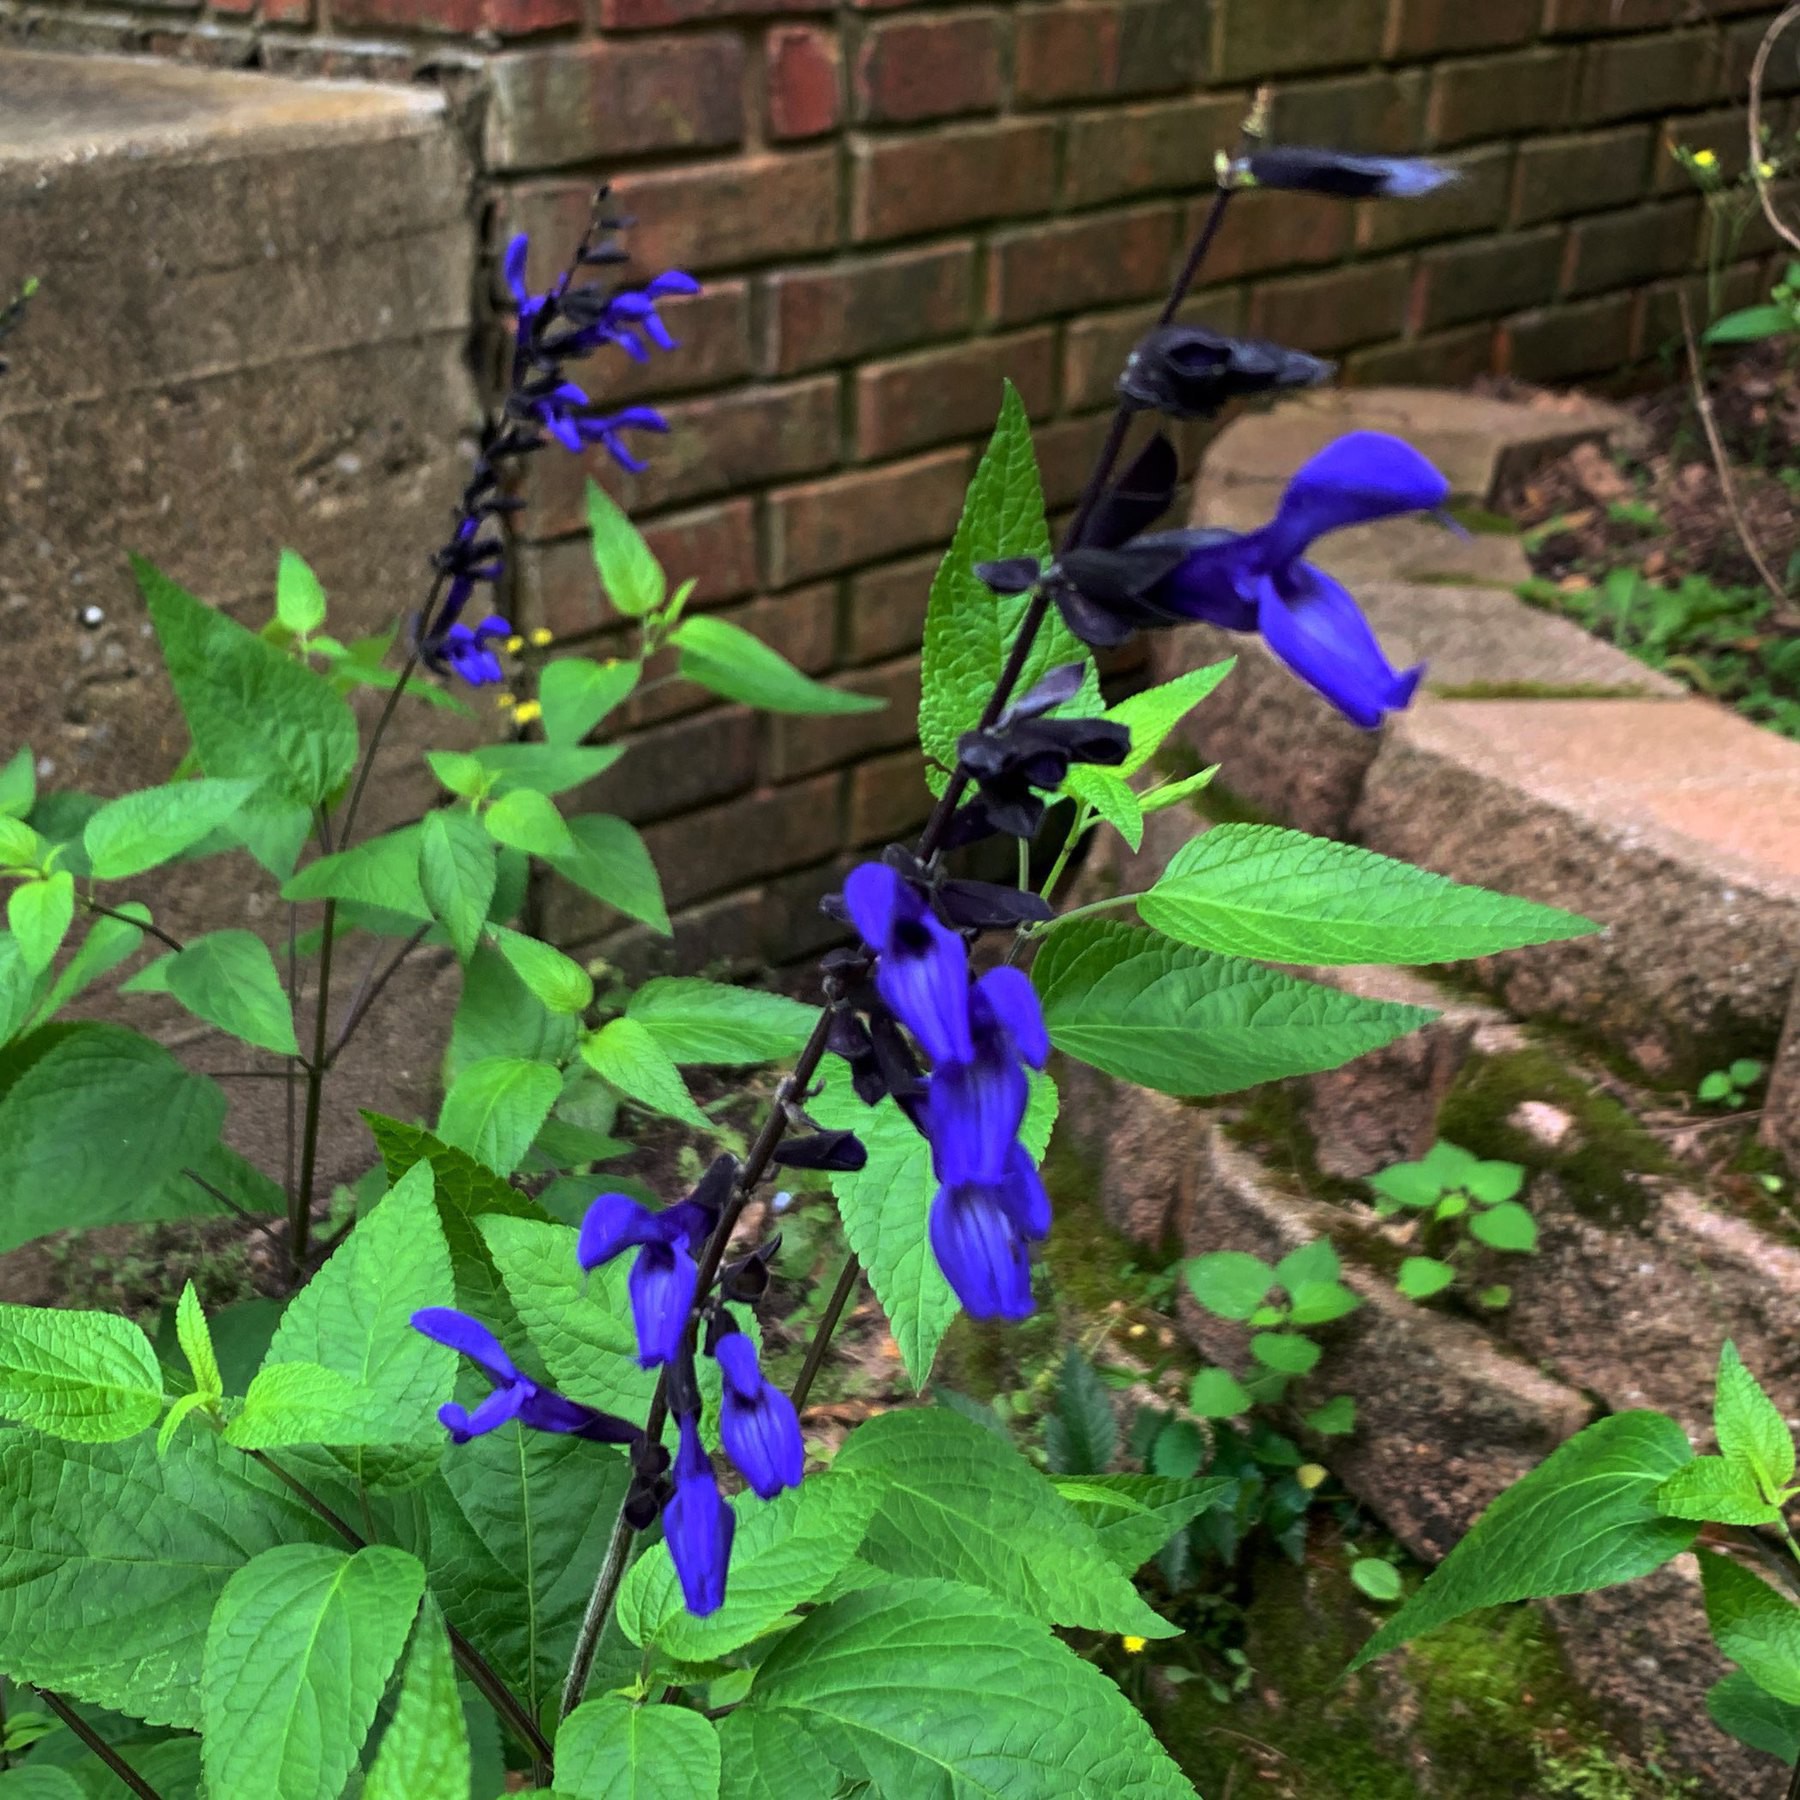 A blooming Black & Blue flower in a garden